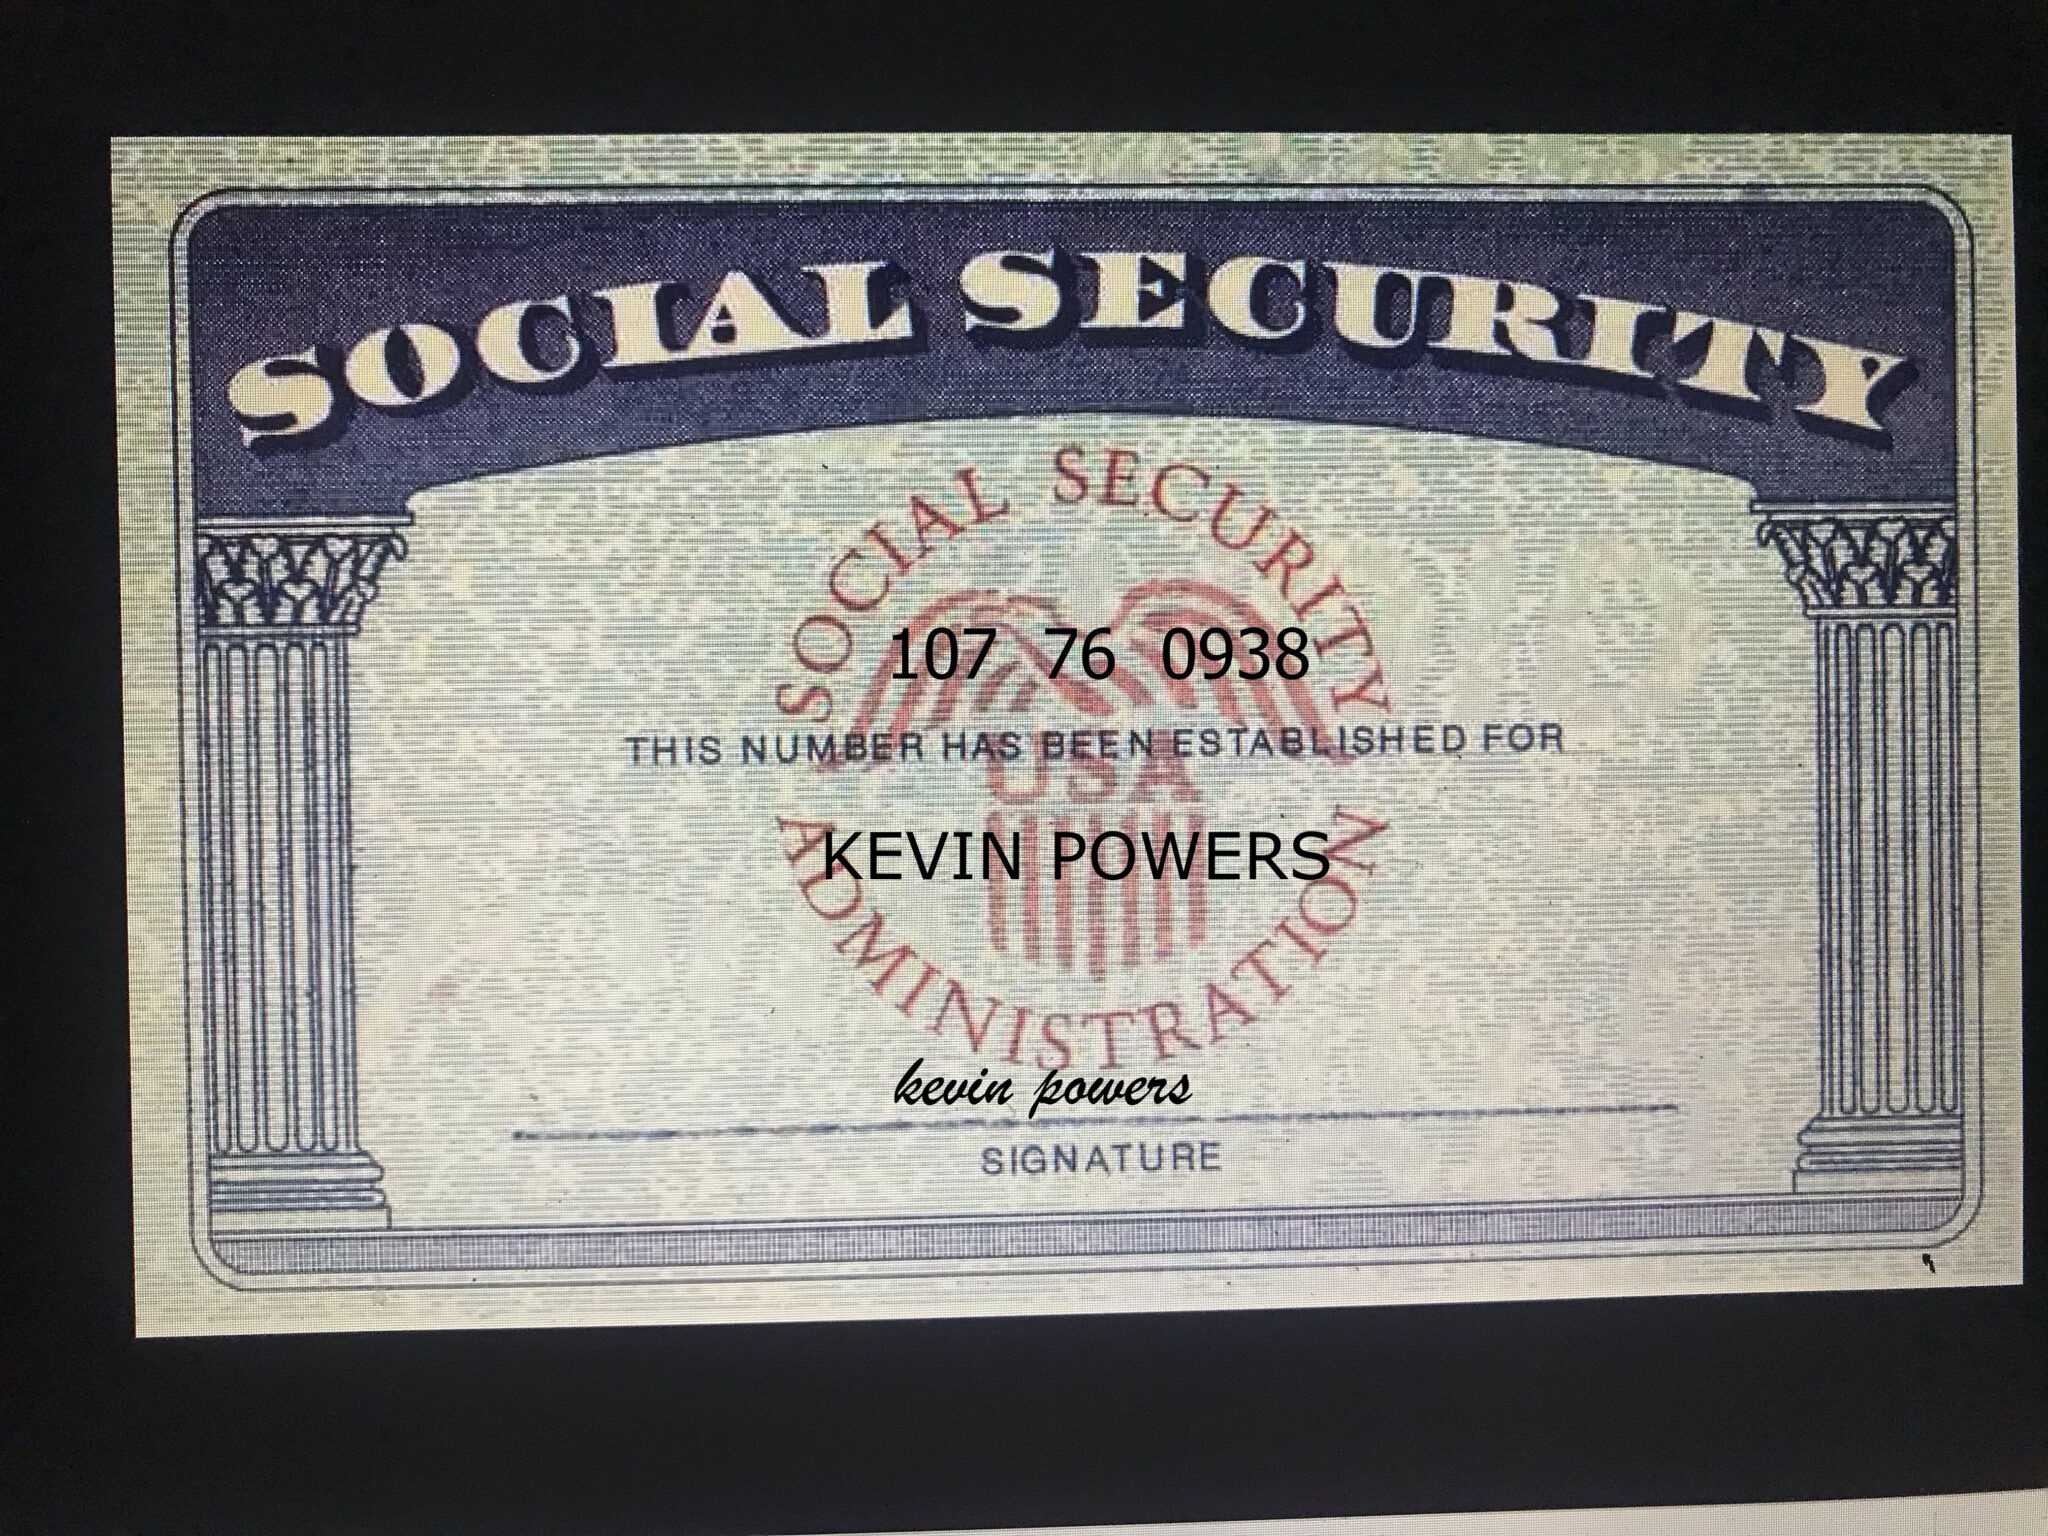 do-you-want-a-social-security-card-contact-puredocuments-with-fake-social-security-card